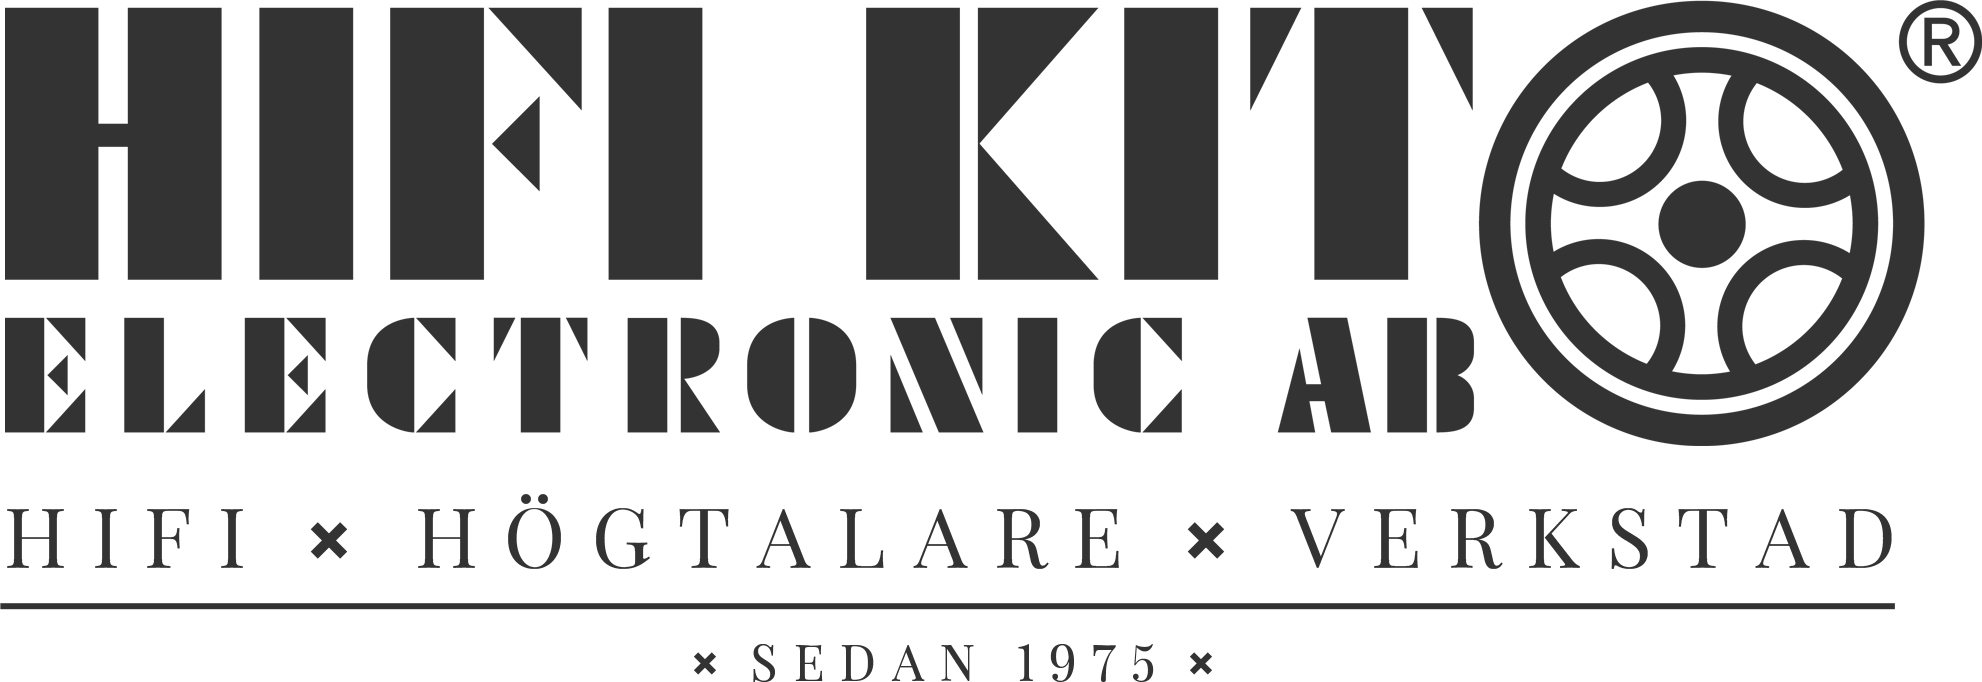 Hi Fi Kit Electronic AB